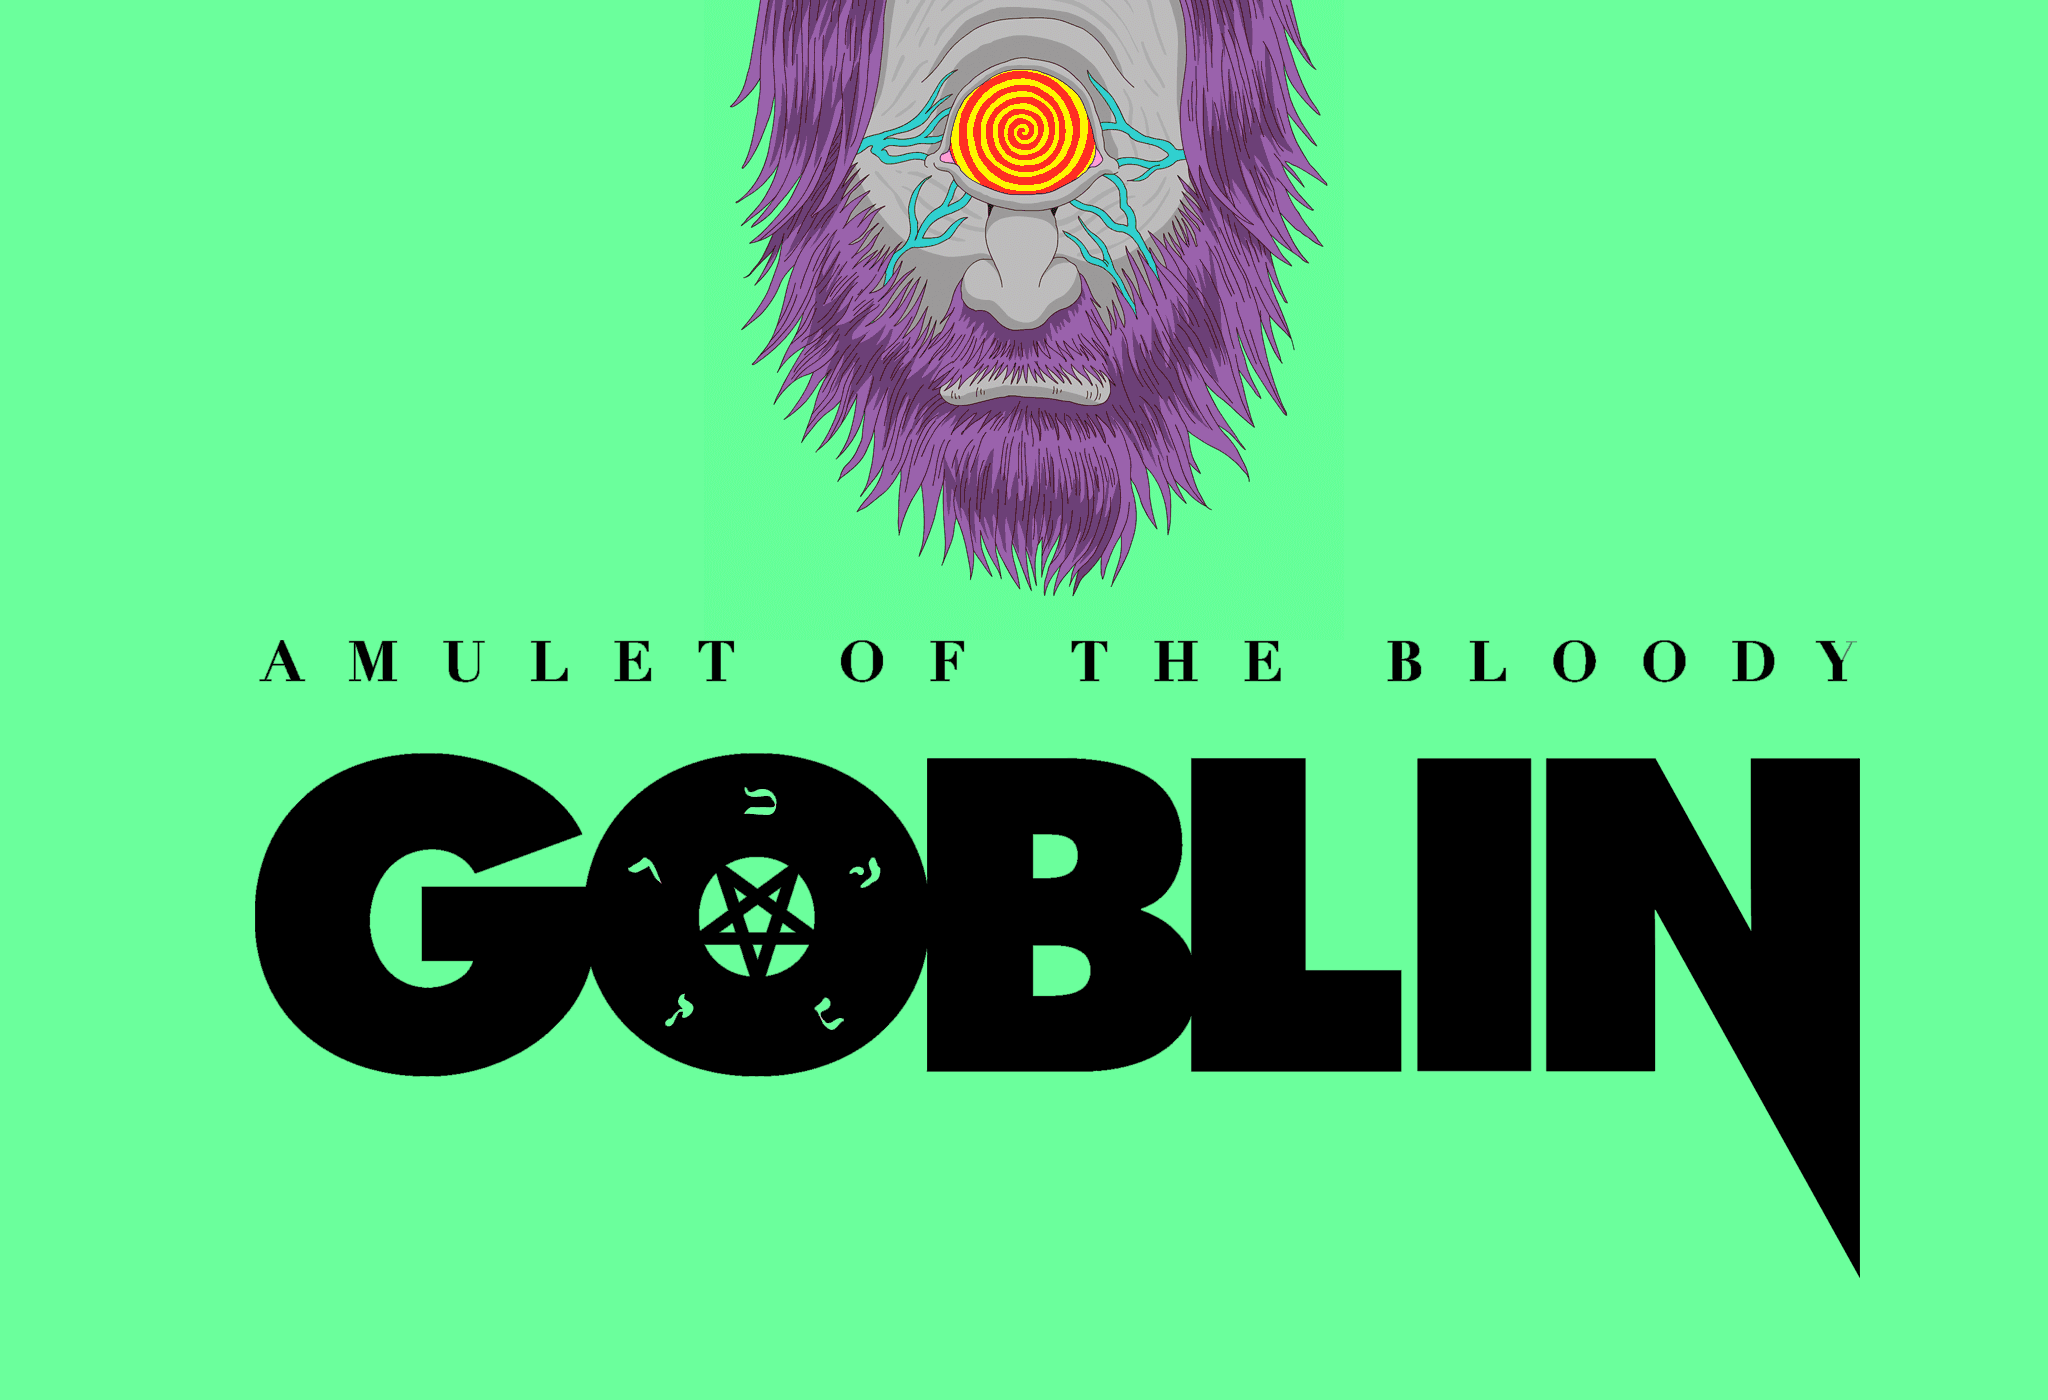 10th ANNIVERSARY RE-ISSUE OF MISHKA'S GOBLIN